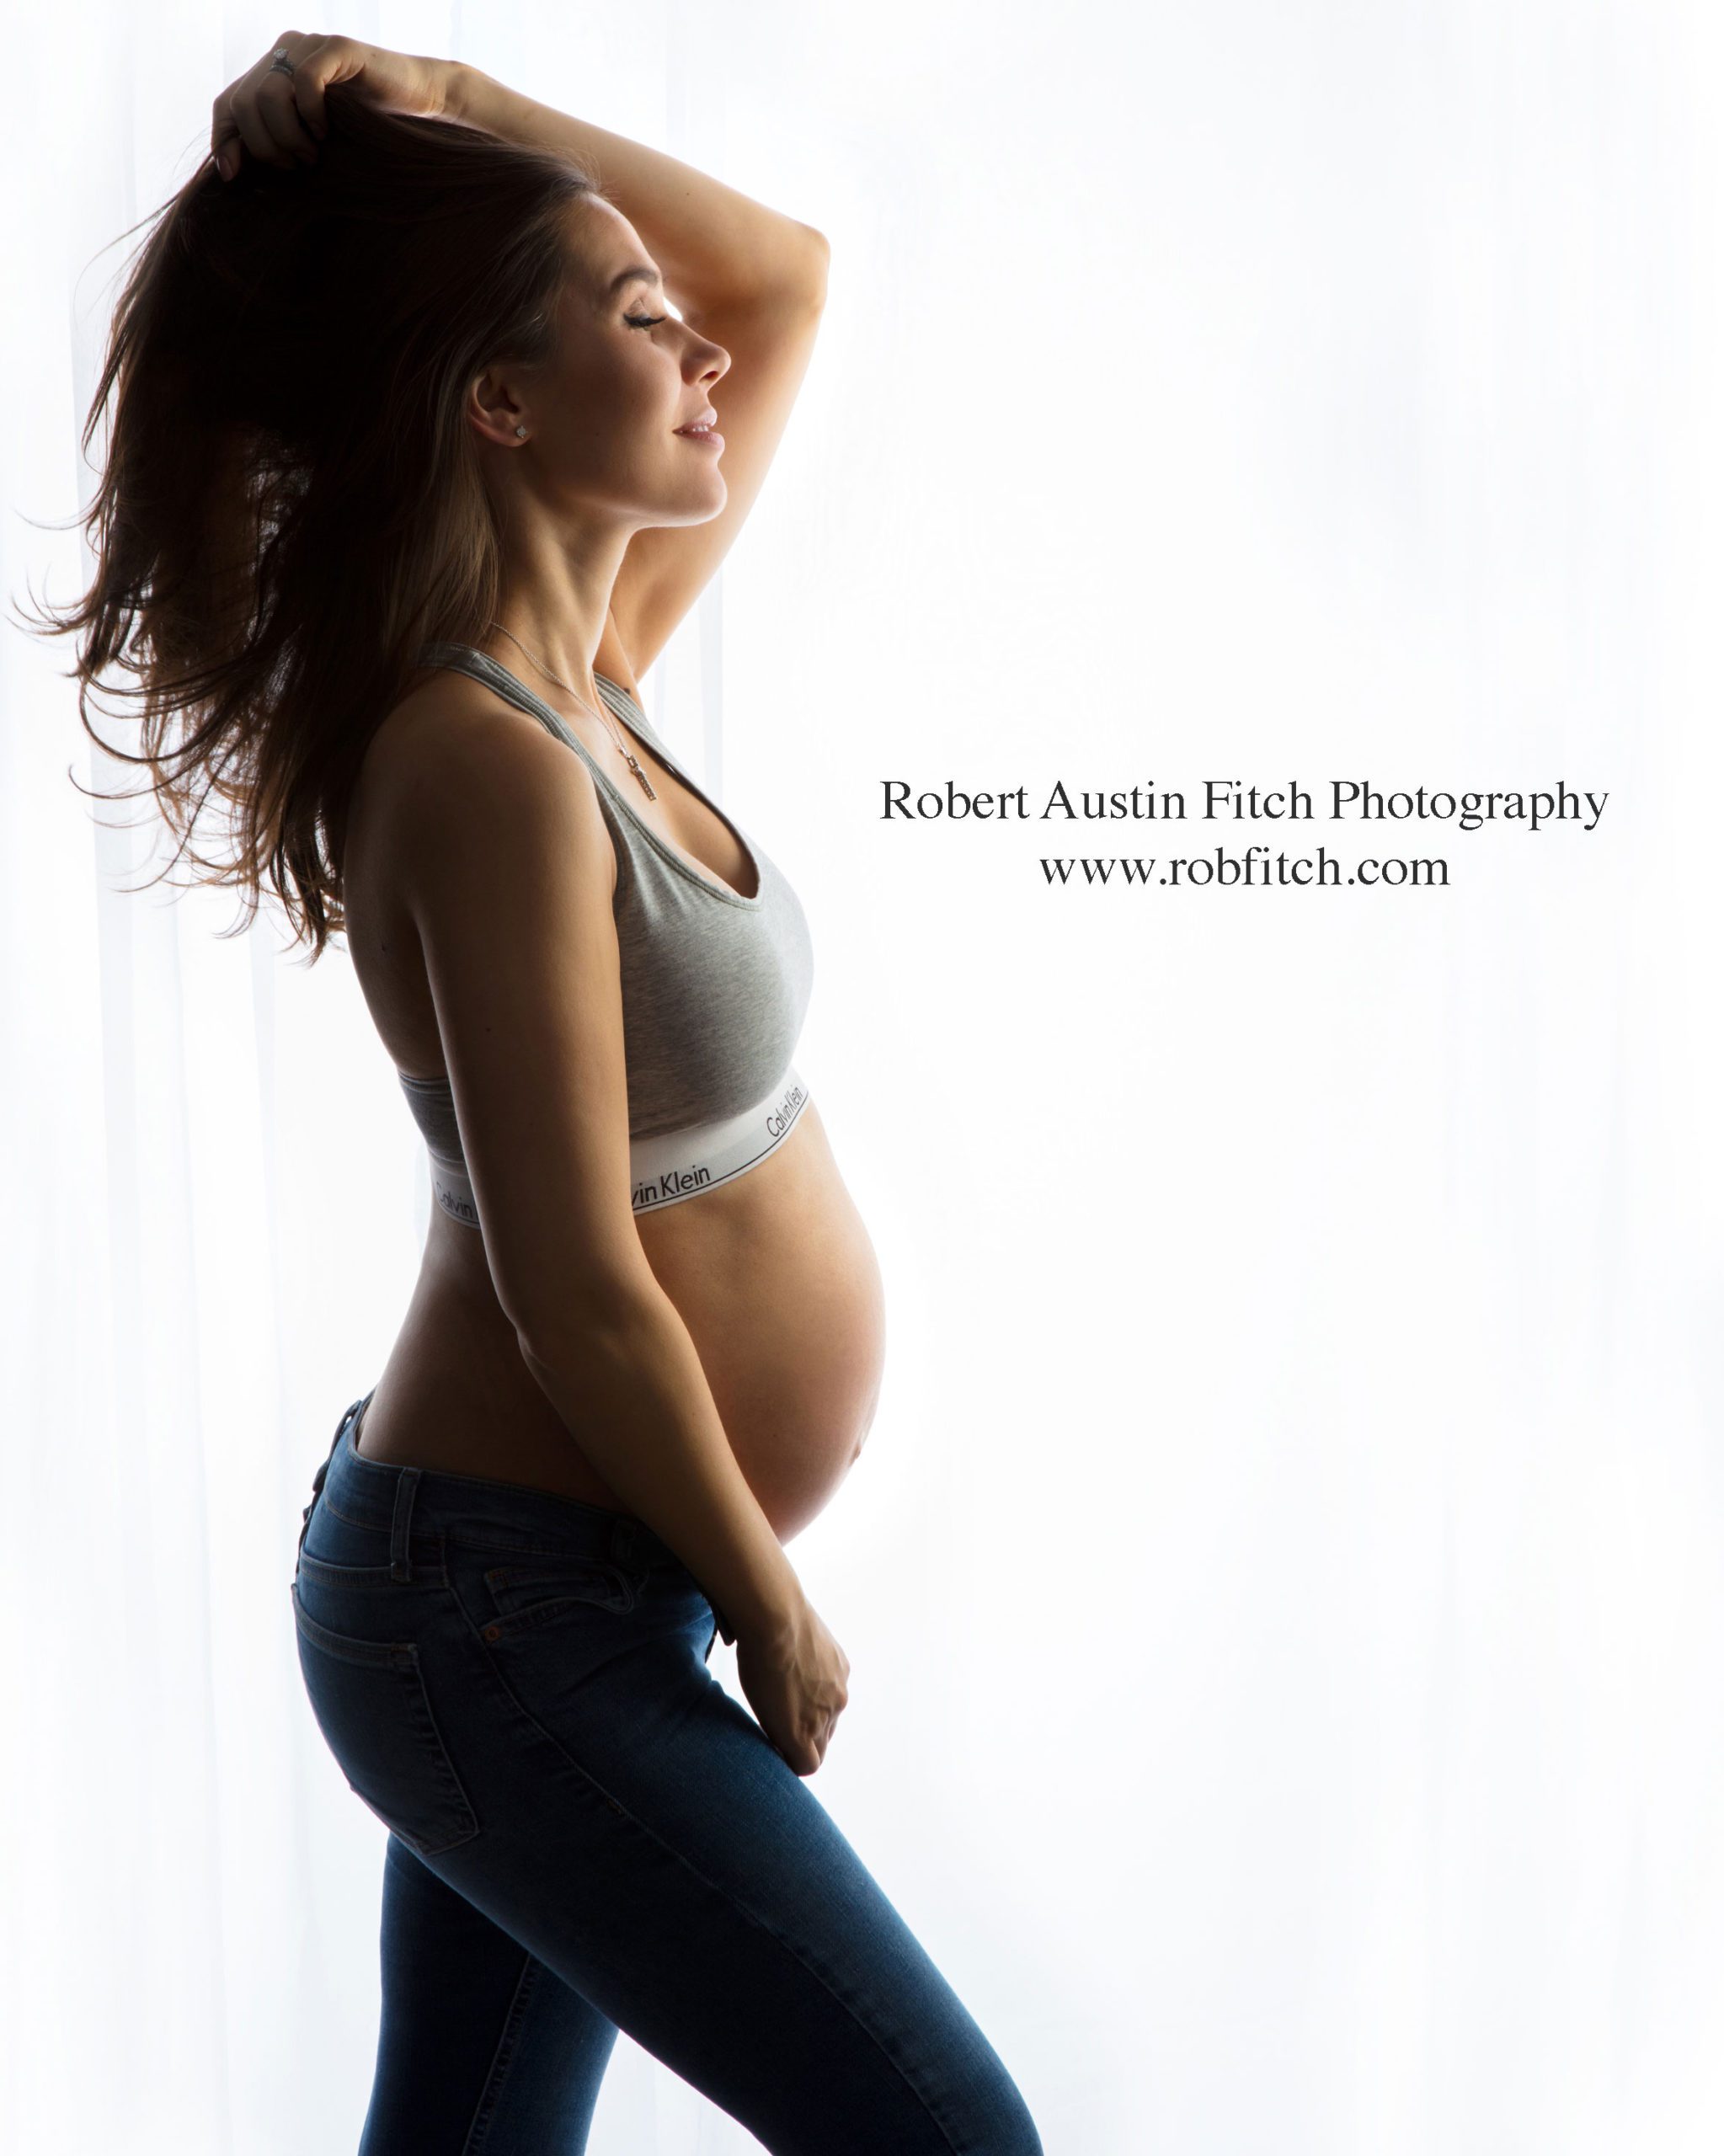 Artistic silhouette maternity photo shoot NJ Robert Austin Fitch Photography